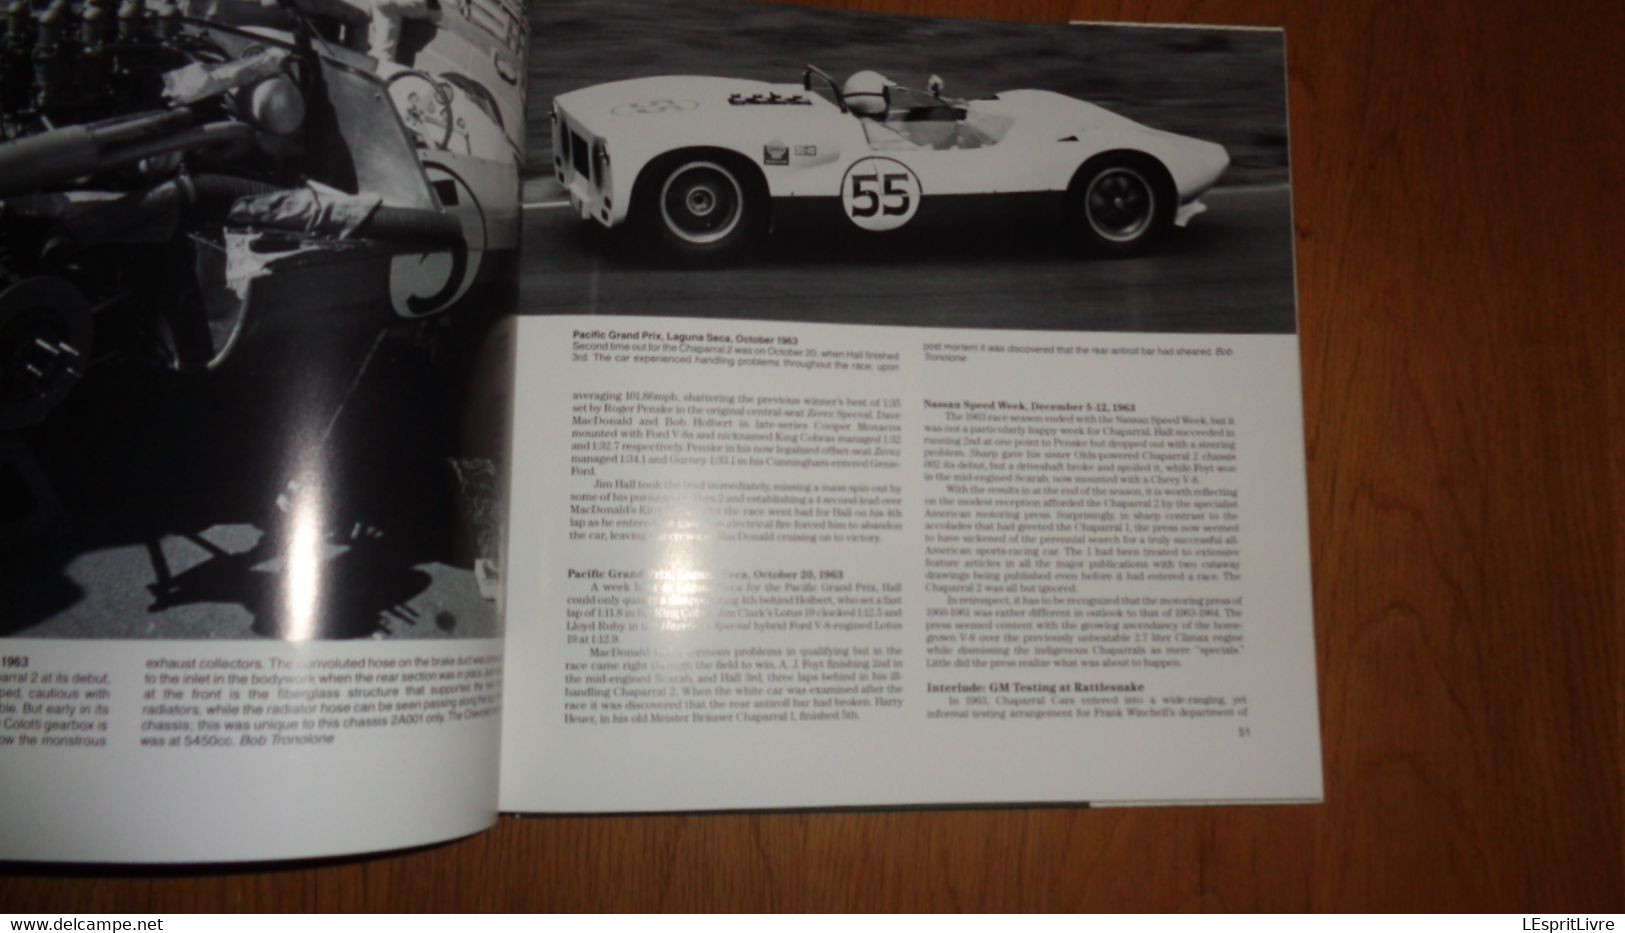 CHAPARRAL Complète History of Jim Hall's Chaparral Race Cars 1961 1970 Racing Cars Course Can Am GP Auto Automobile Car